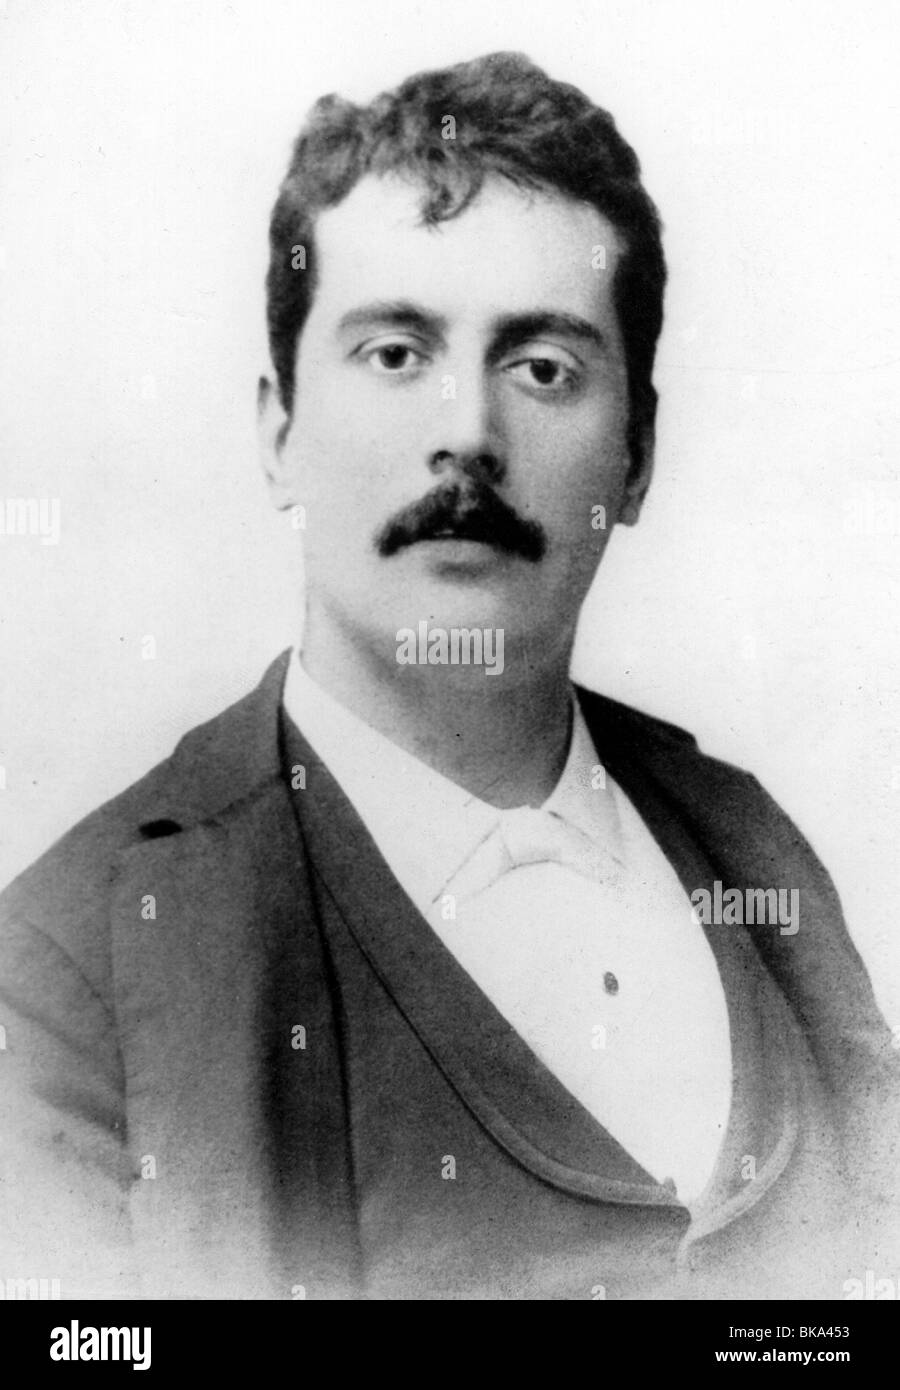 Puccini, Giacomo, 22.12.1858 - 29.11.1924, Italian musician (opera composer), portrait, 1889, Stock Photo